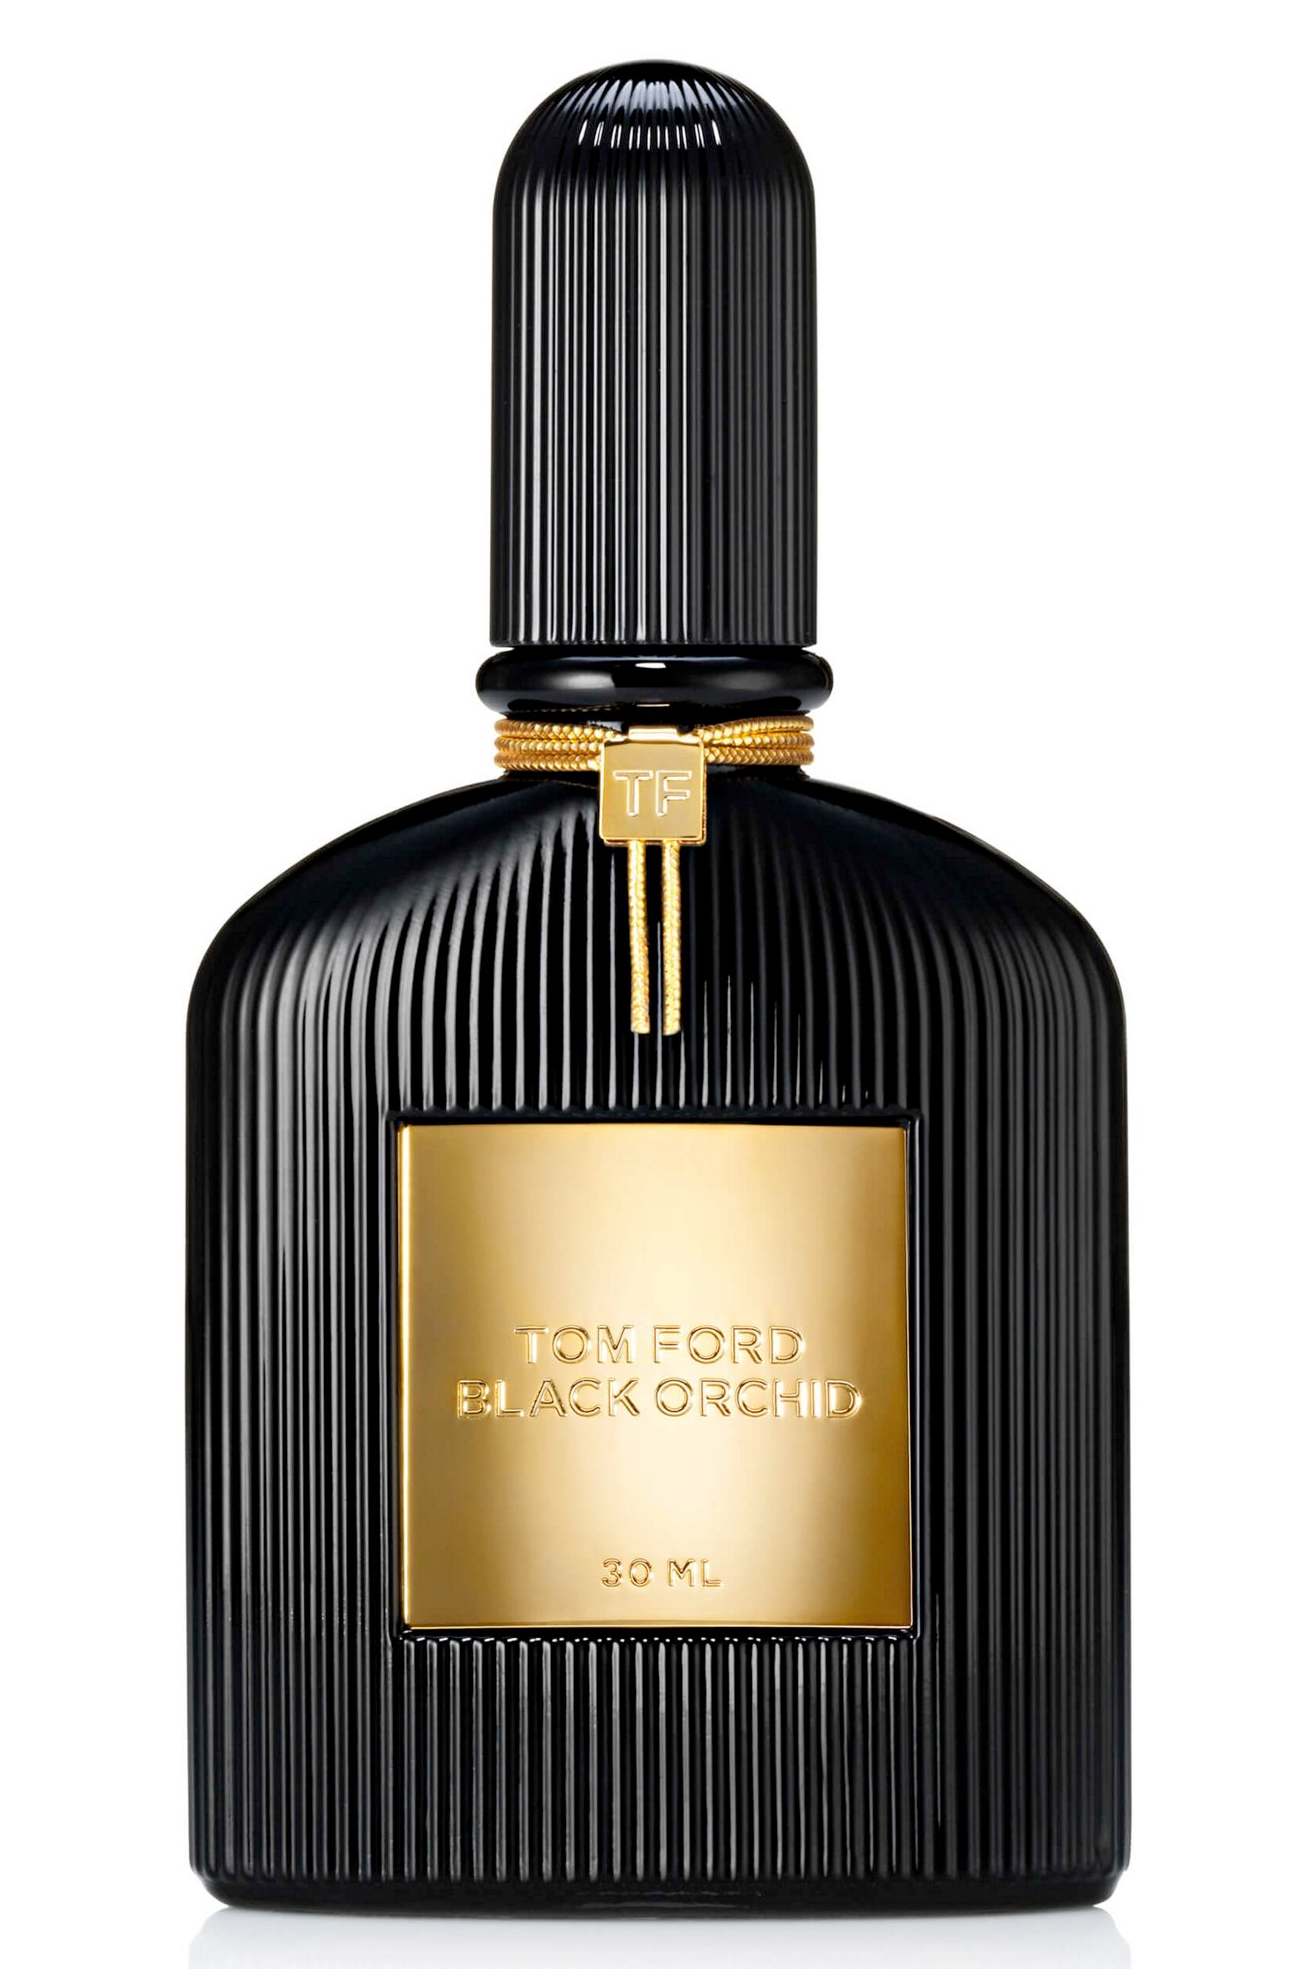 Black Orchid Oud Tom Ford perfumy to perfumy dla kobiet 2012